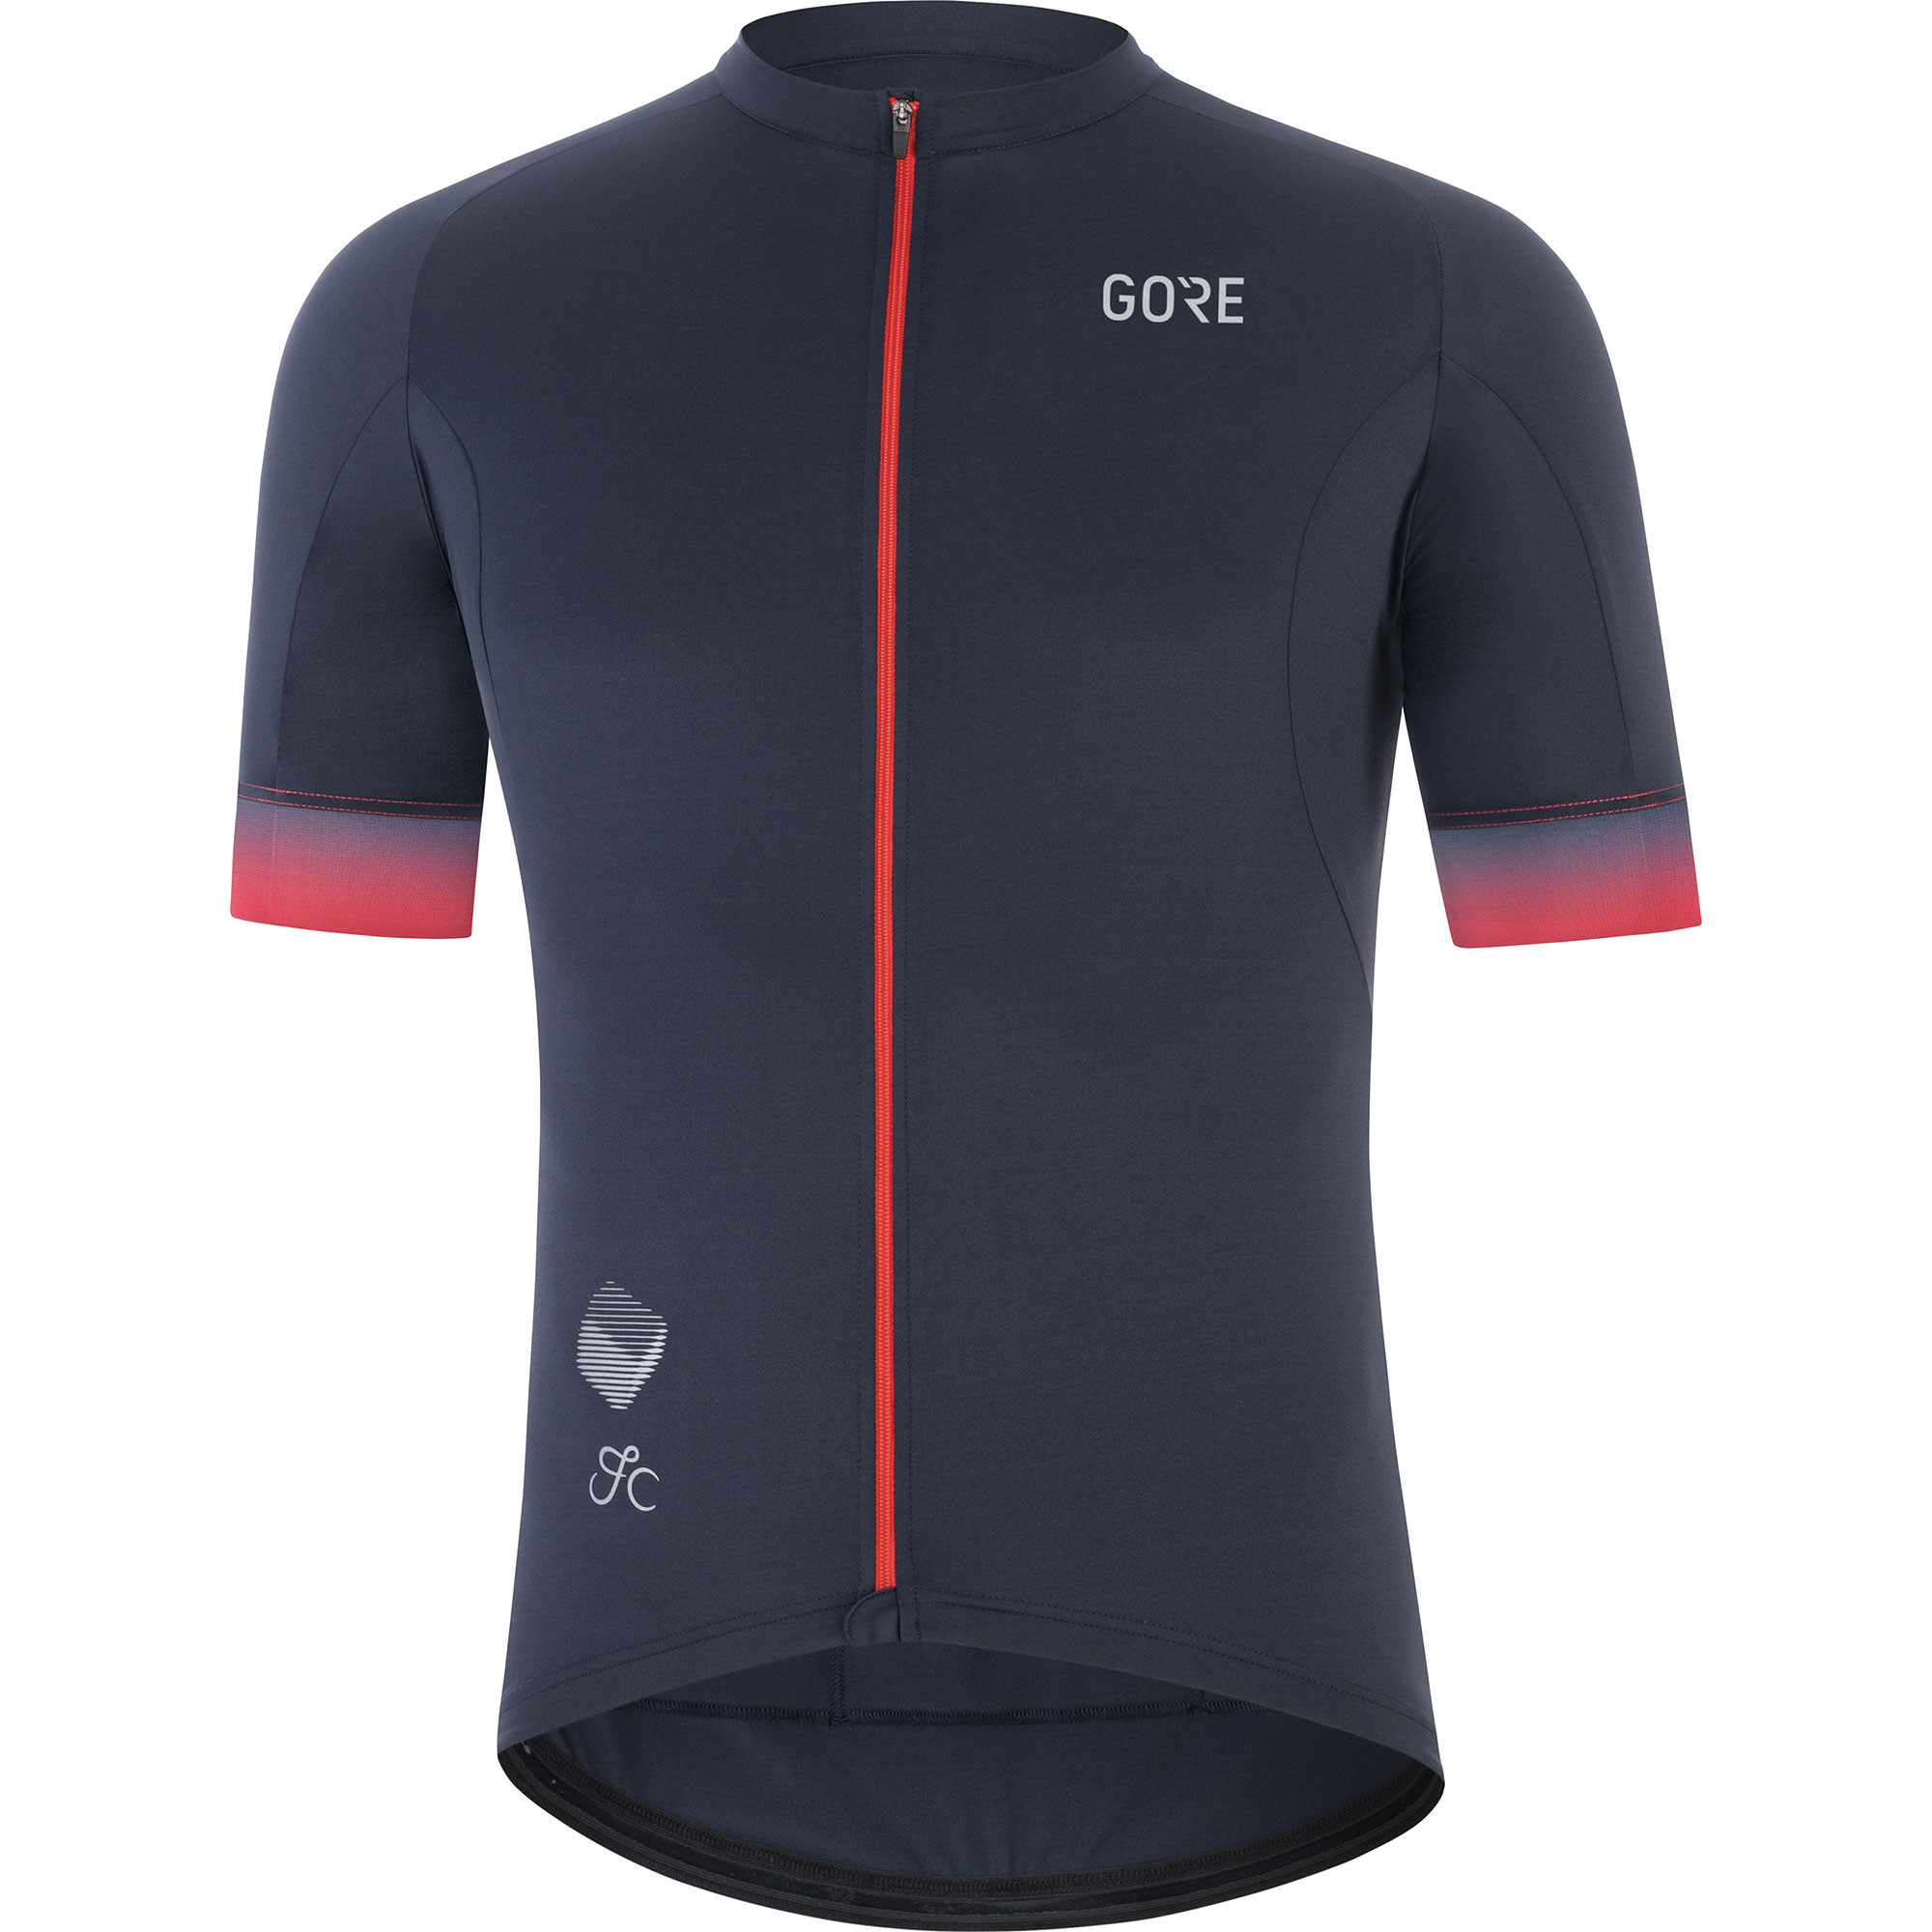 Gore Wear Cancellara Jersey Mens - Orbit Blue/Red